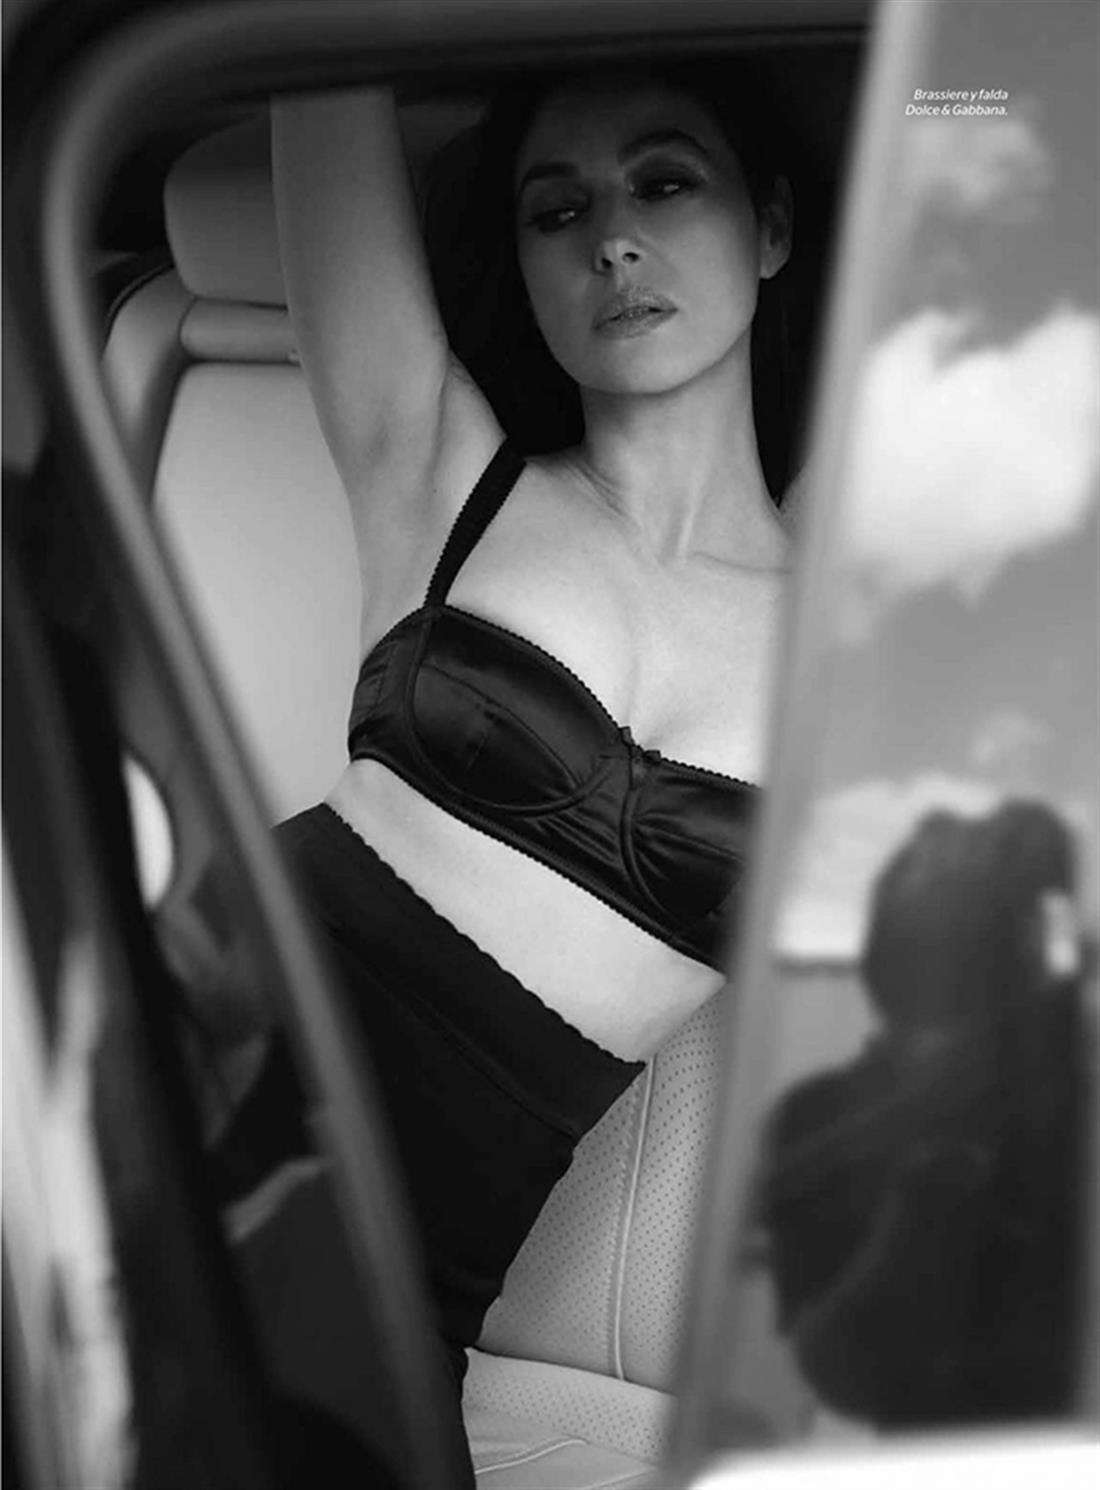 Monica Bellucci - Esquire - περιοδικό - φωτογράφηση